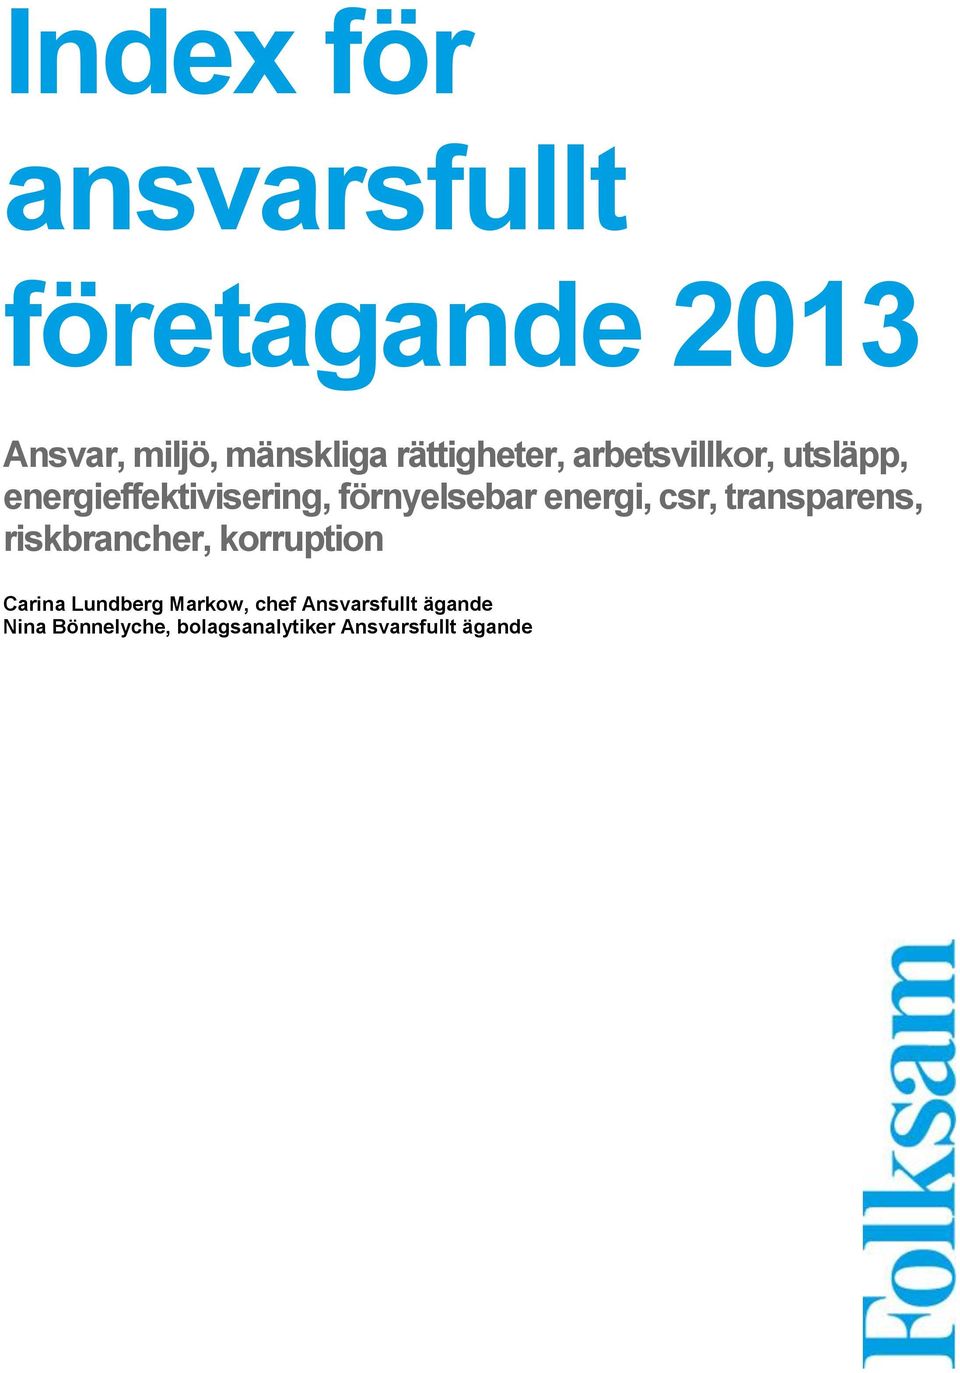 energi, csr, transparens, riskbrancher, korruption Carina Lundberg